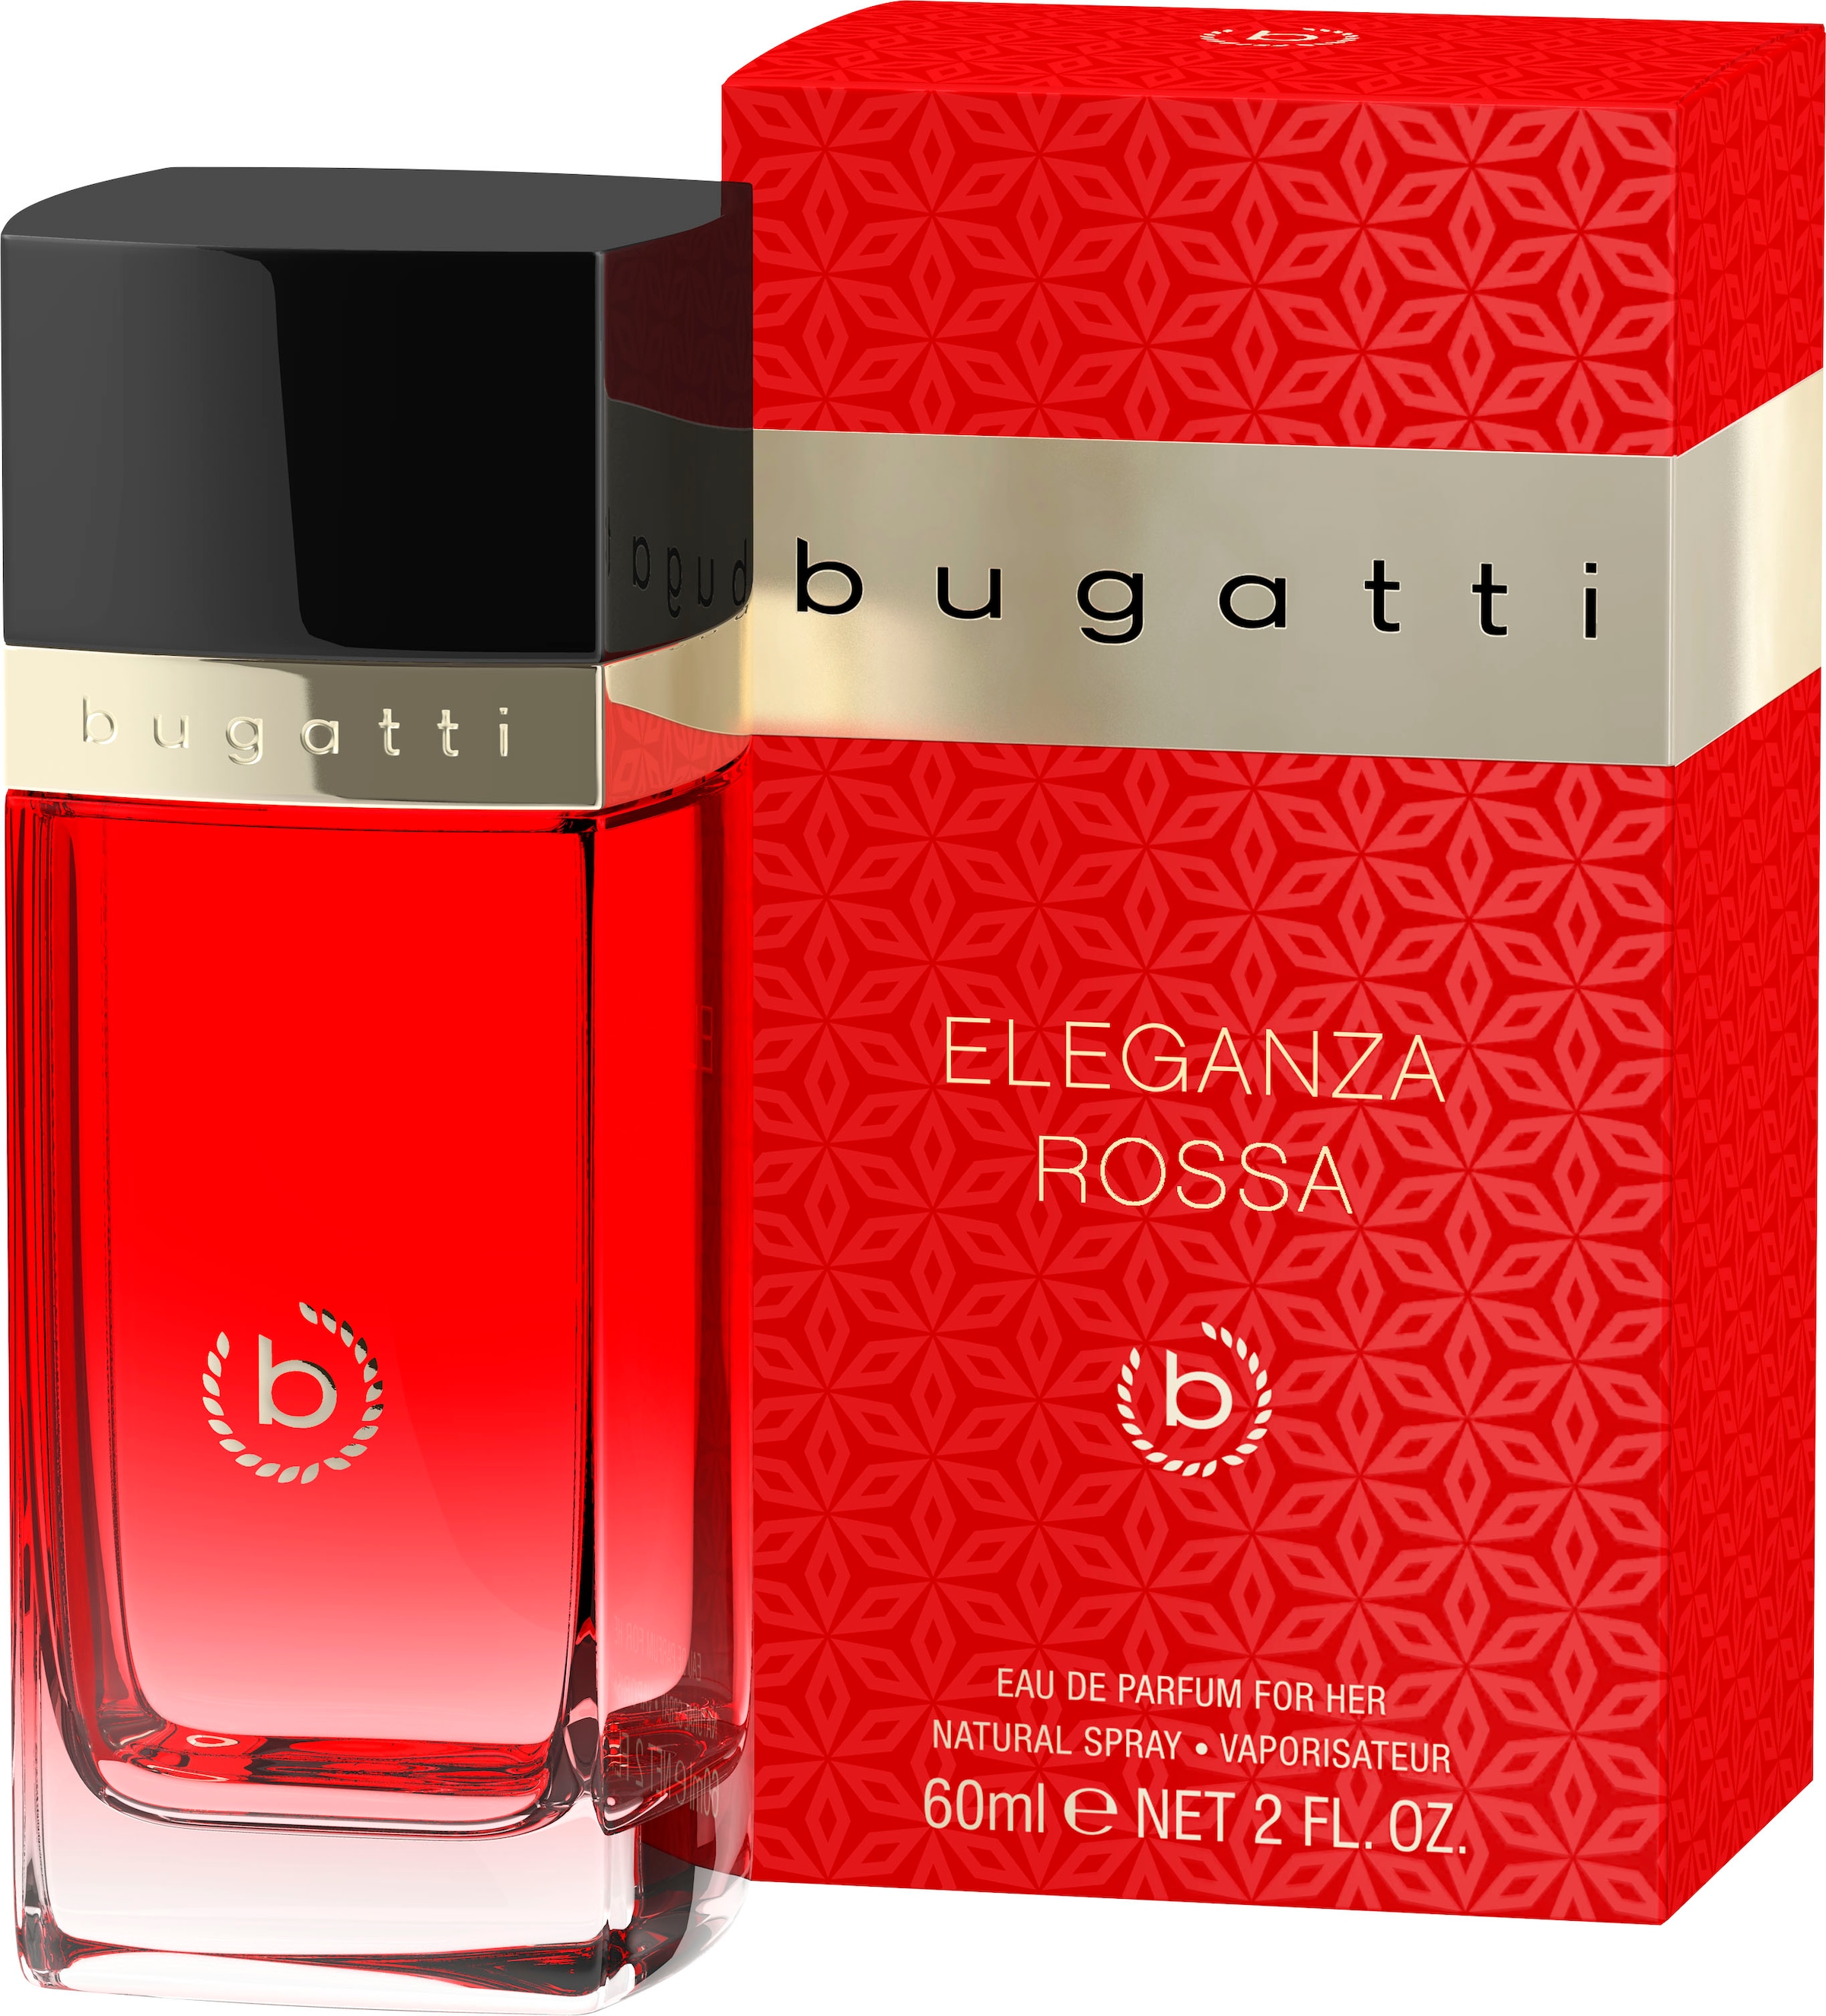 bugatti Eau de Rossa »BUGATTI for EdP kaufen UNIVERSAL | Parfum her Eleganza 60 ml«